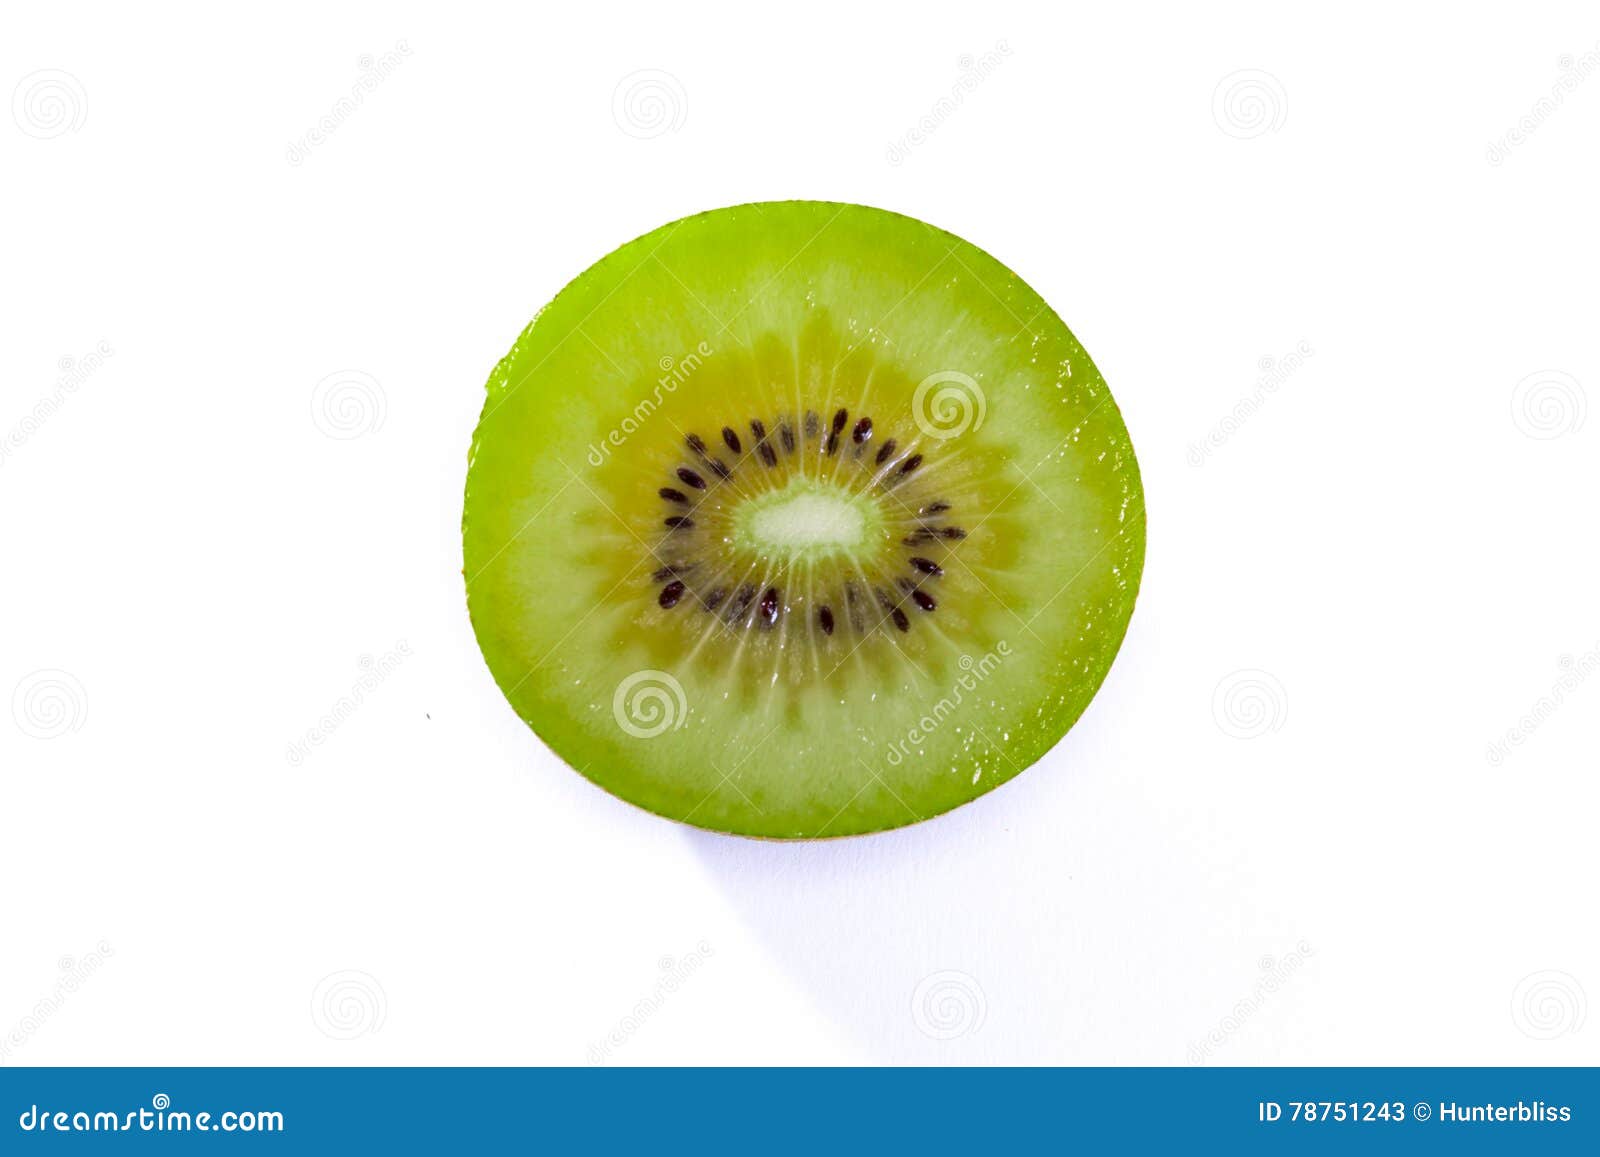 Kiwi fruit in spanish